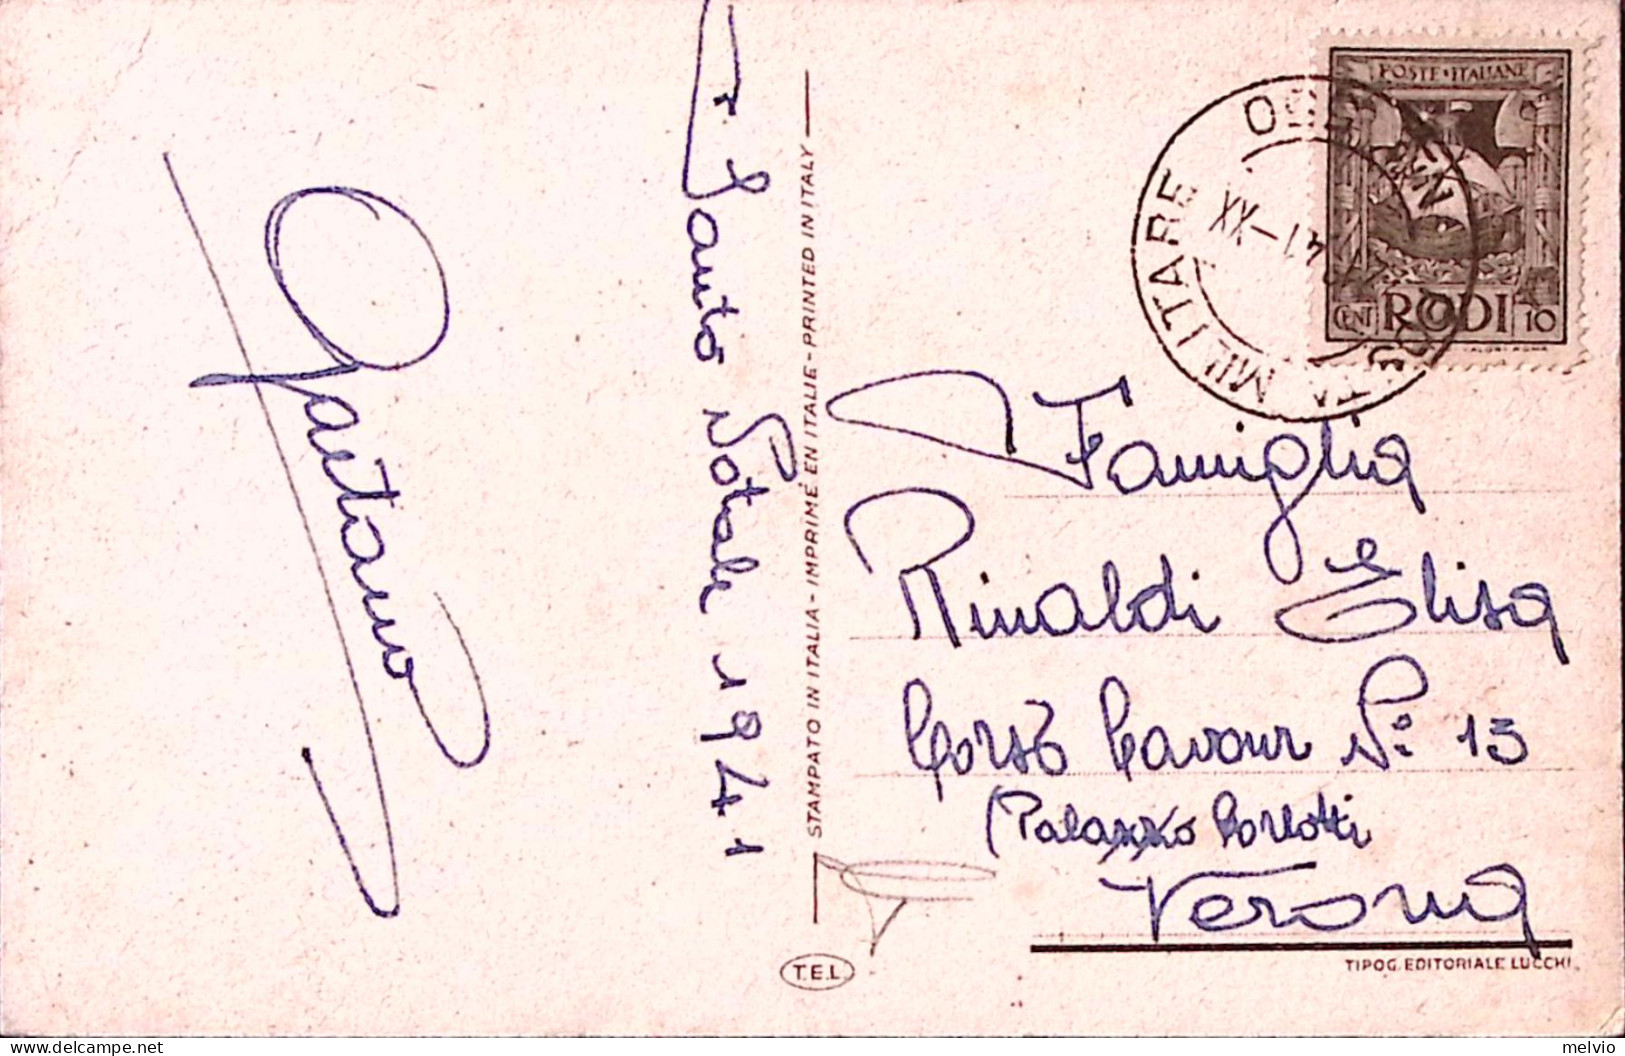 1941-Posta Militare 550 C.2 (22.12) Su Cartolina Affrancata Egeo C.10 - Ägäis